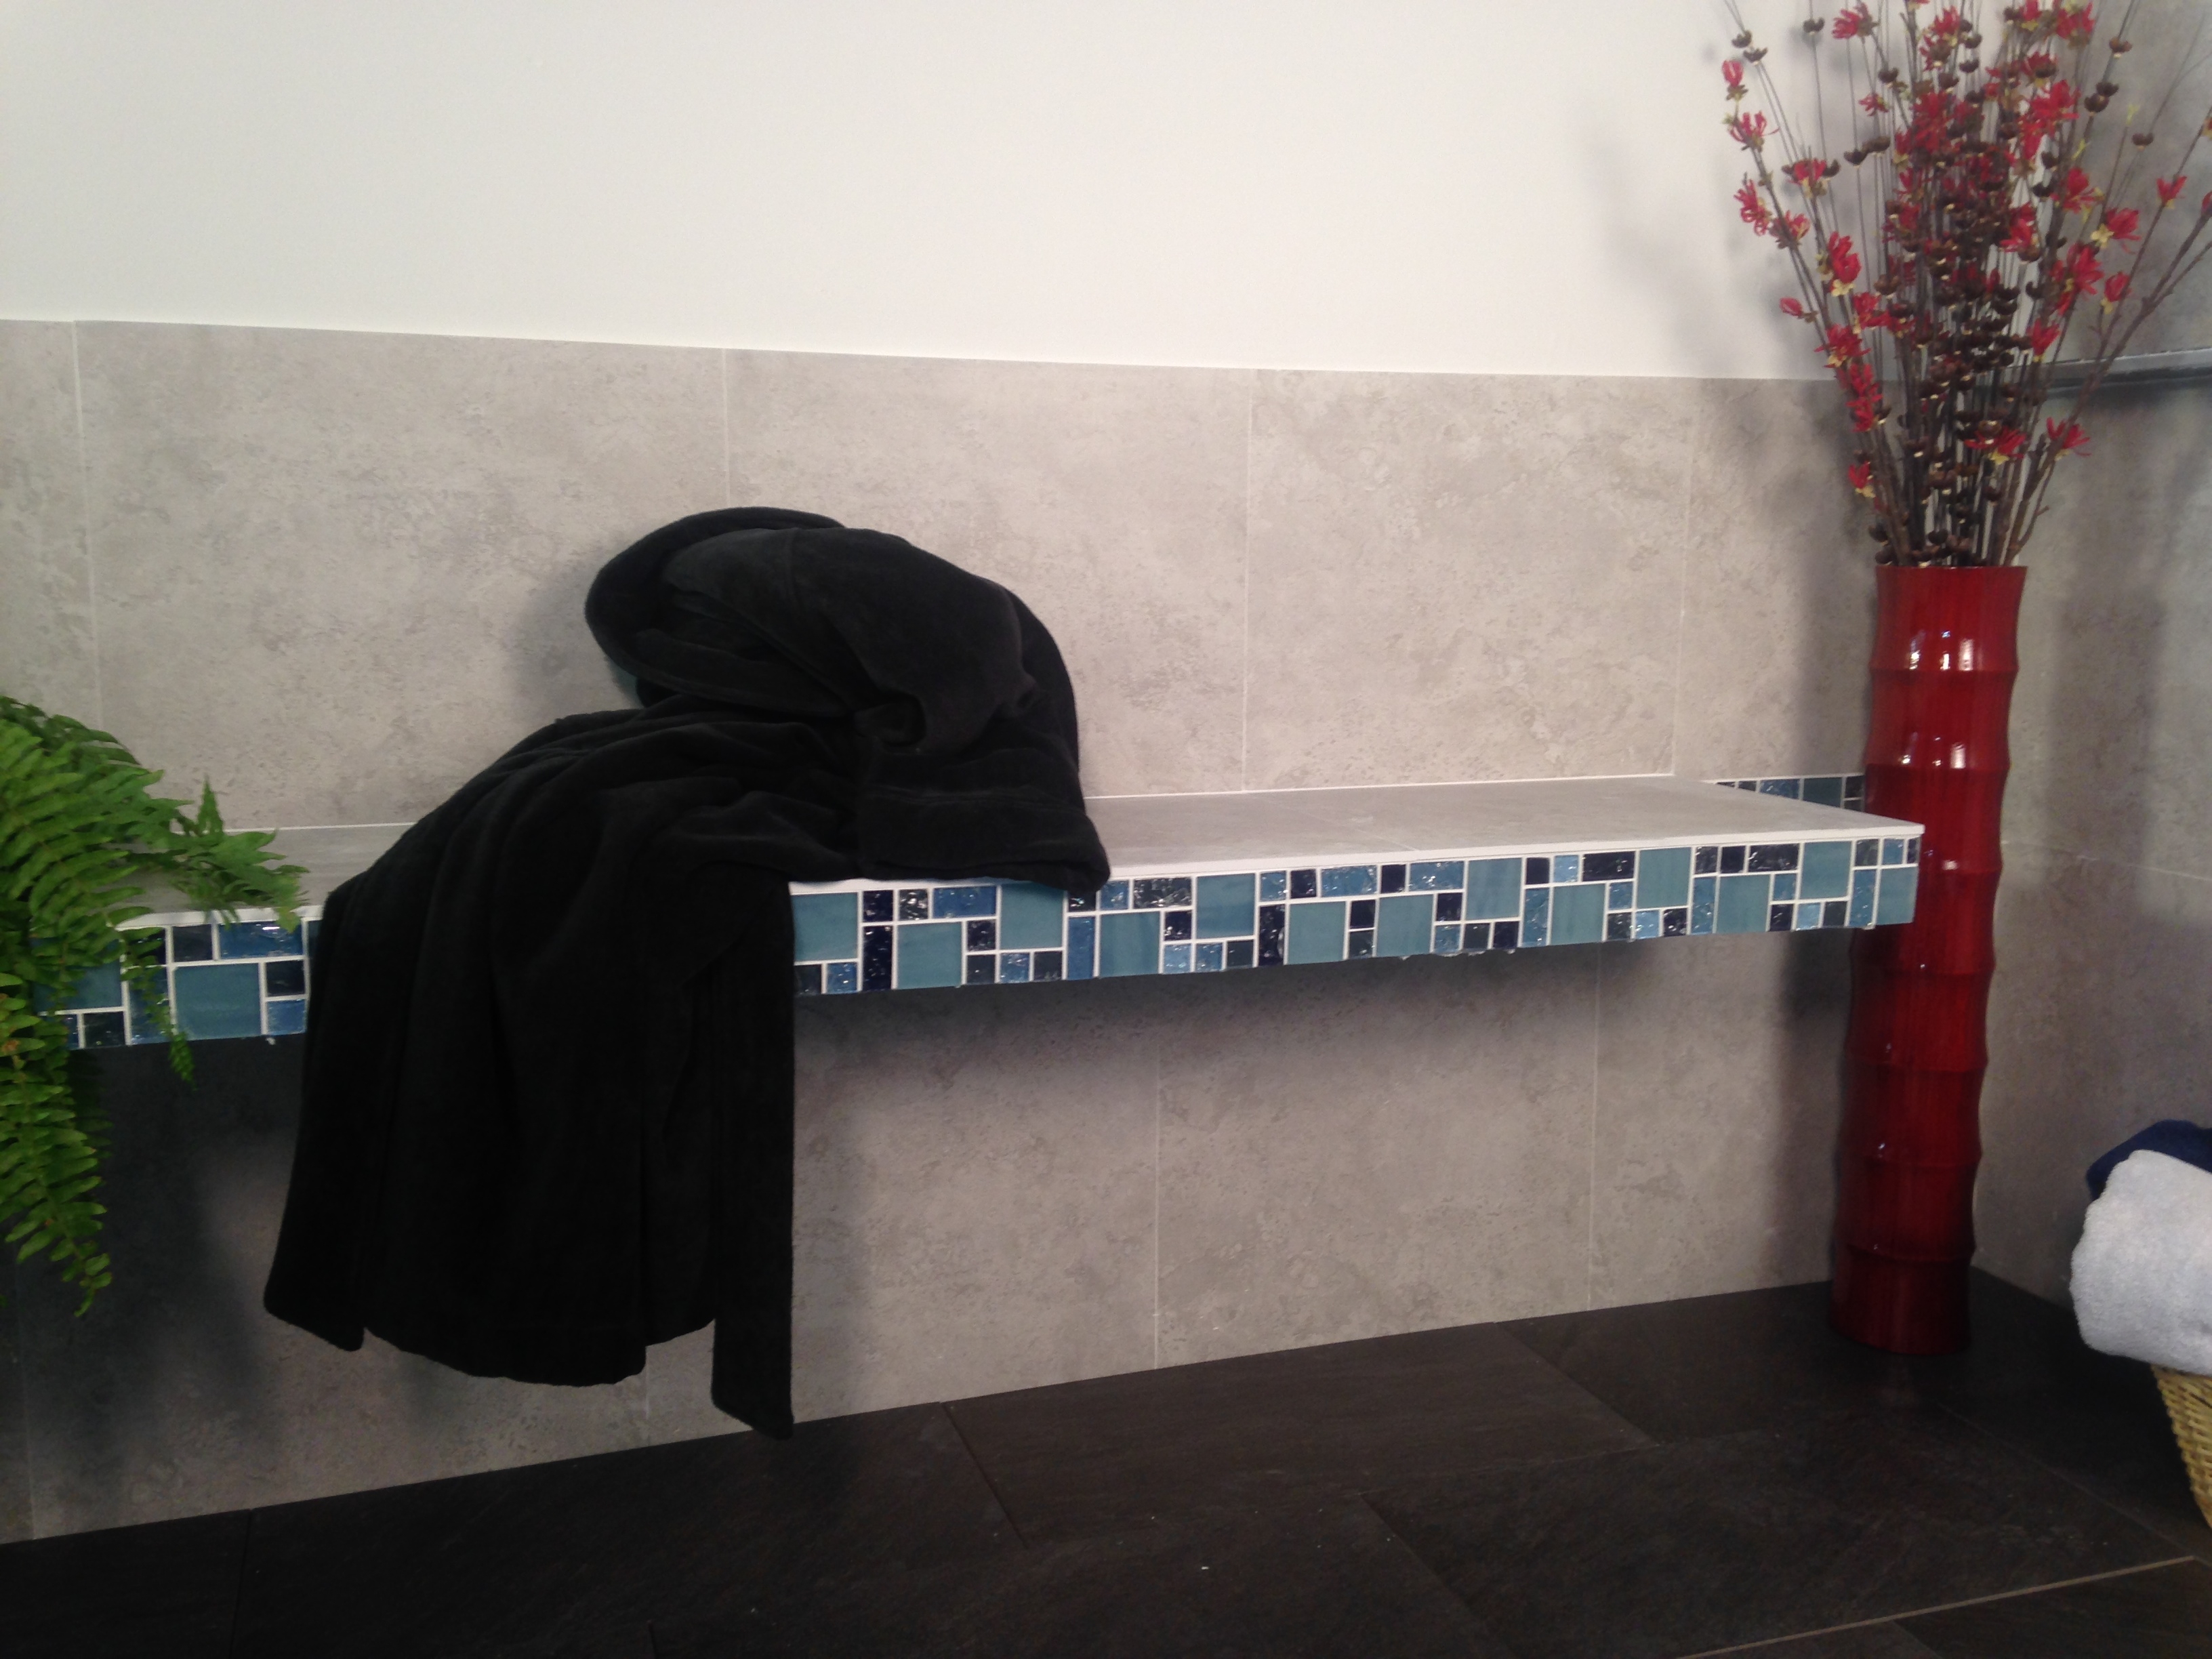 17 inch Triangular Shower Bench/Shelf - Better-Bench by Innovis